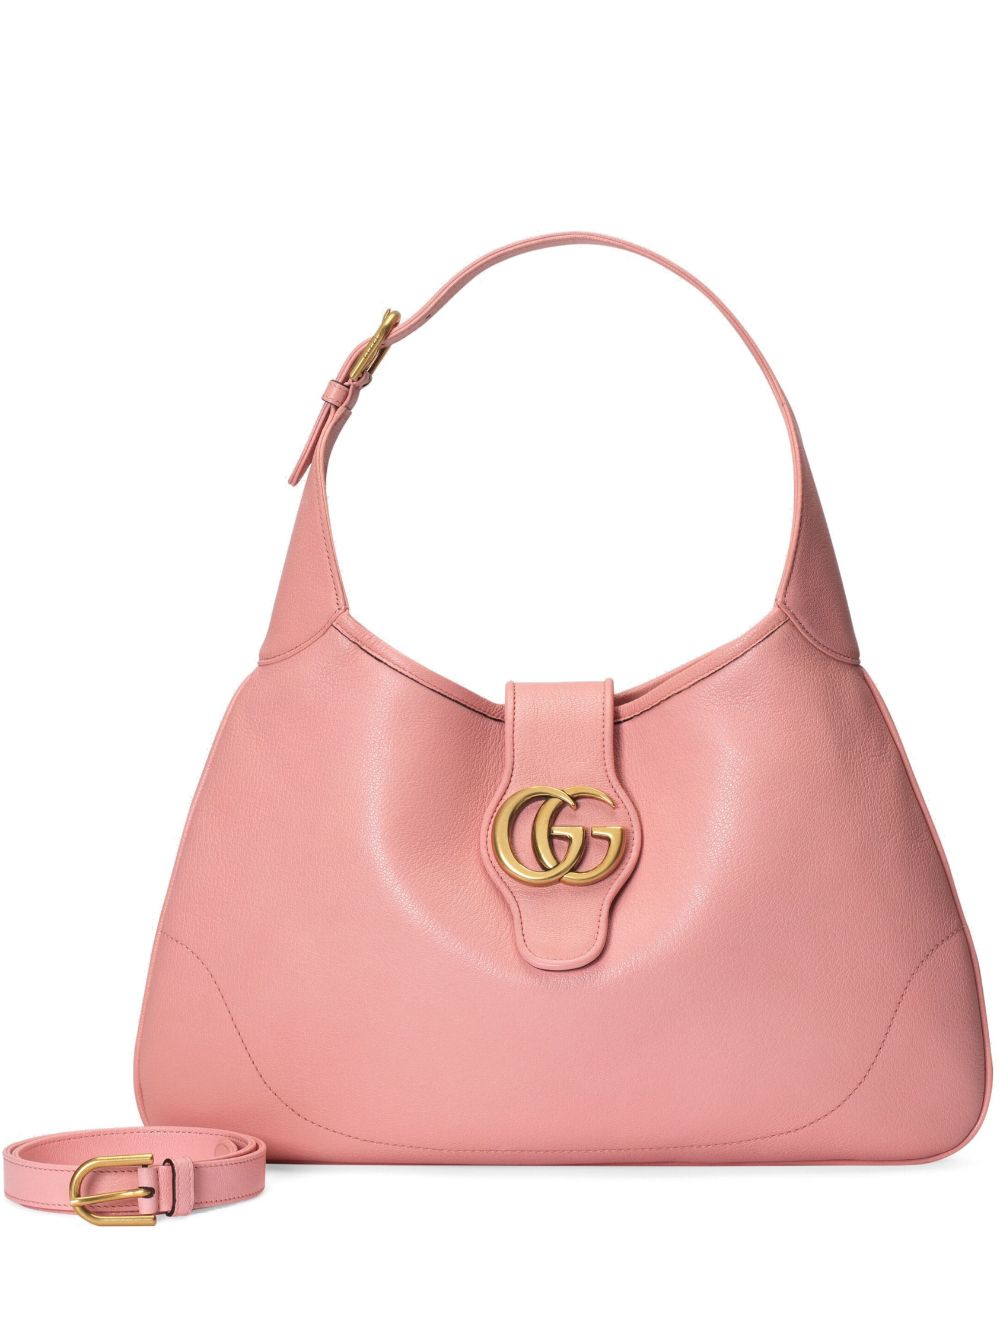 Gucci medium Aphrodite shoulder bag - Pink - Realry: Your Fashion Search Engine